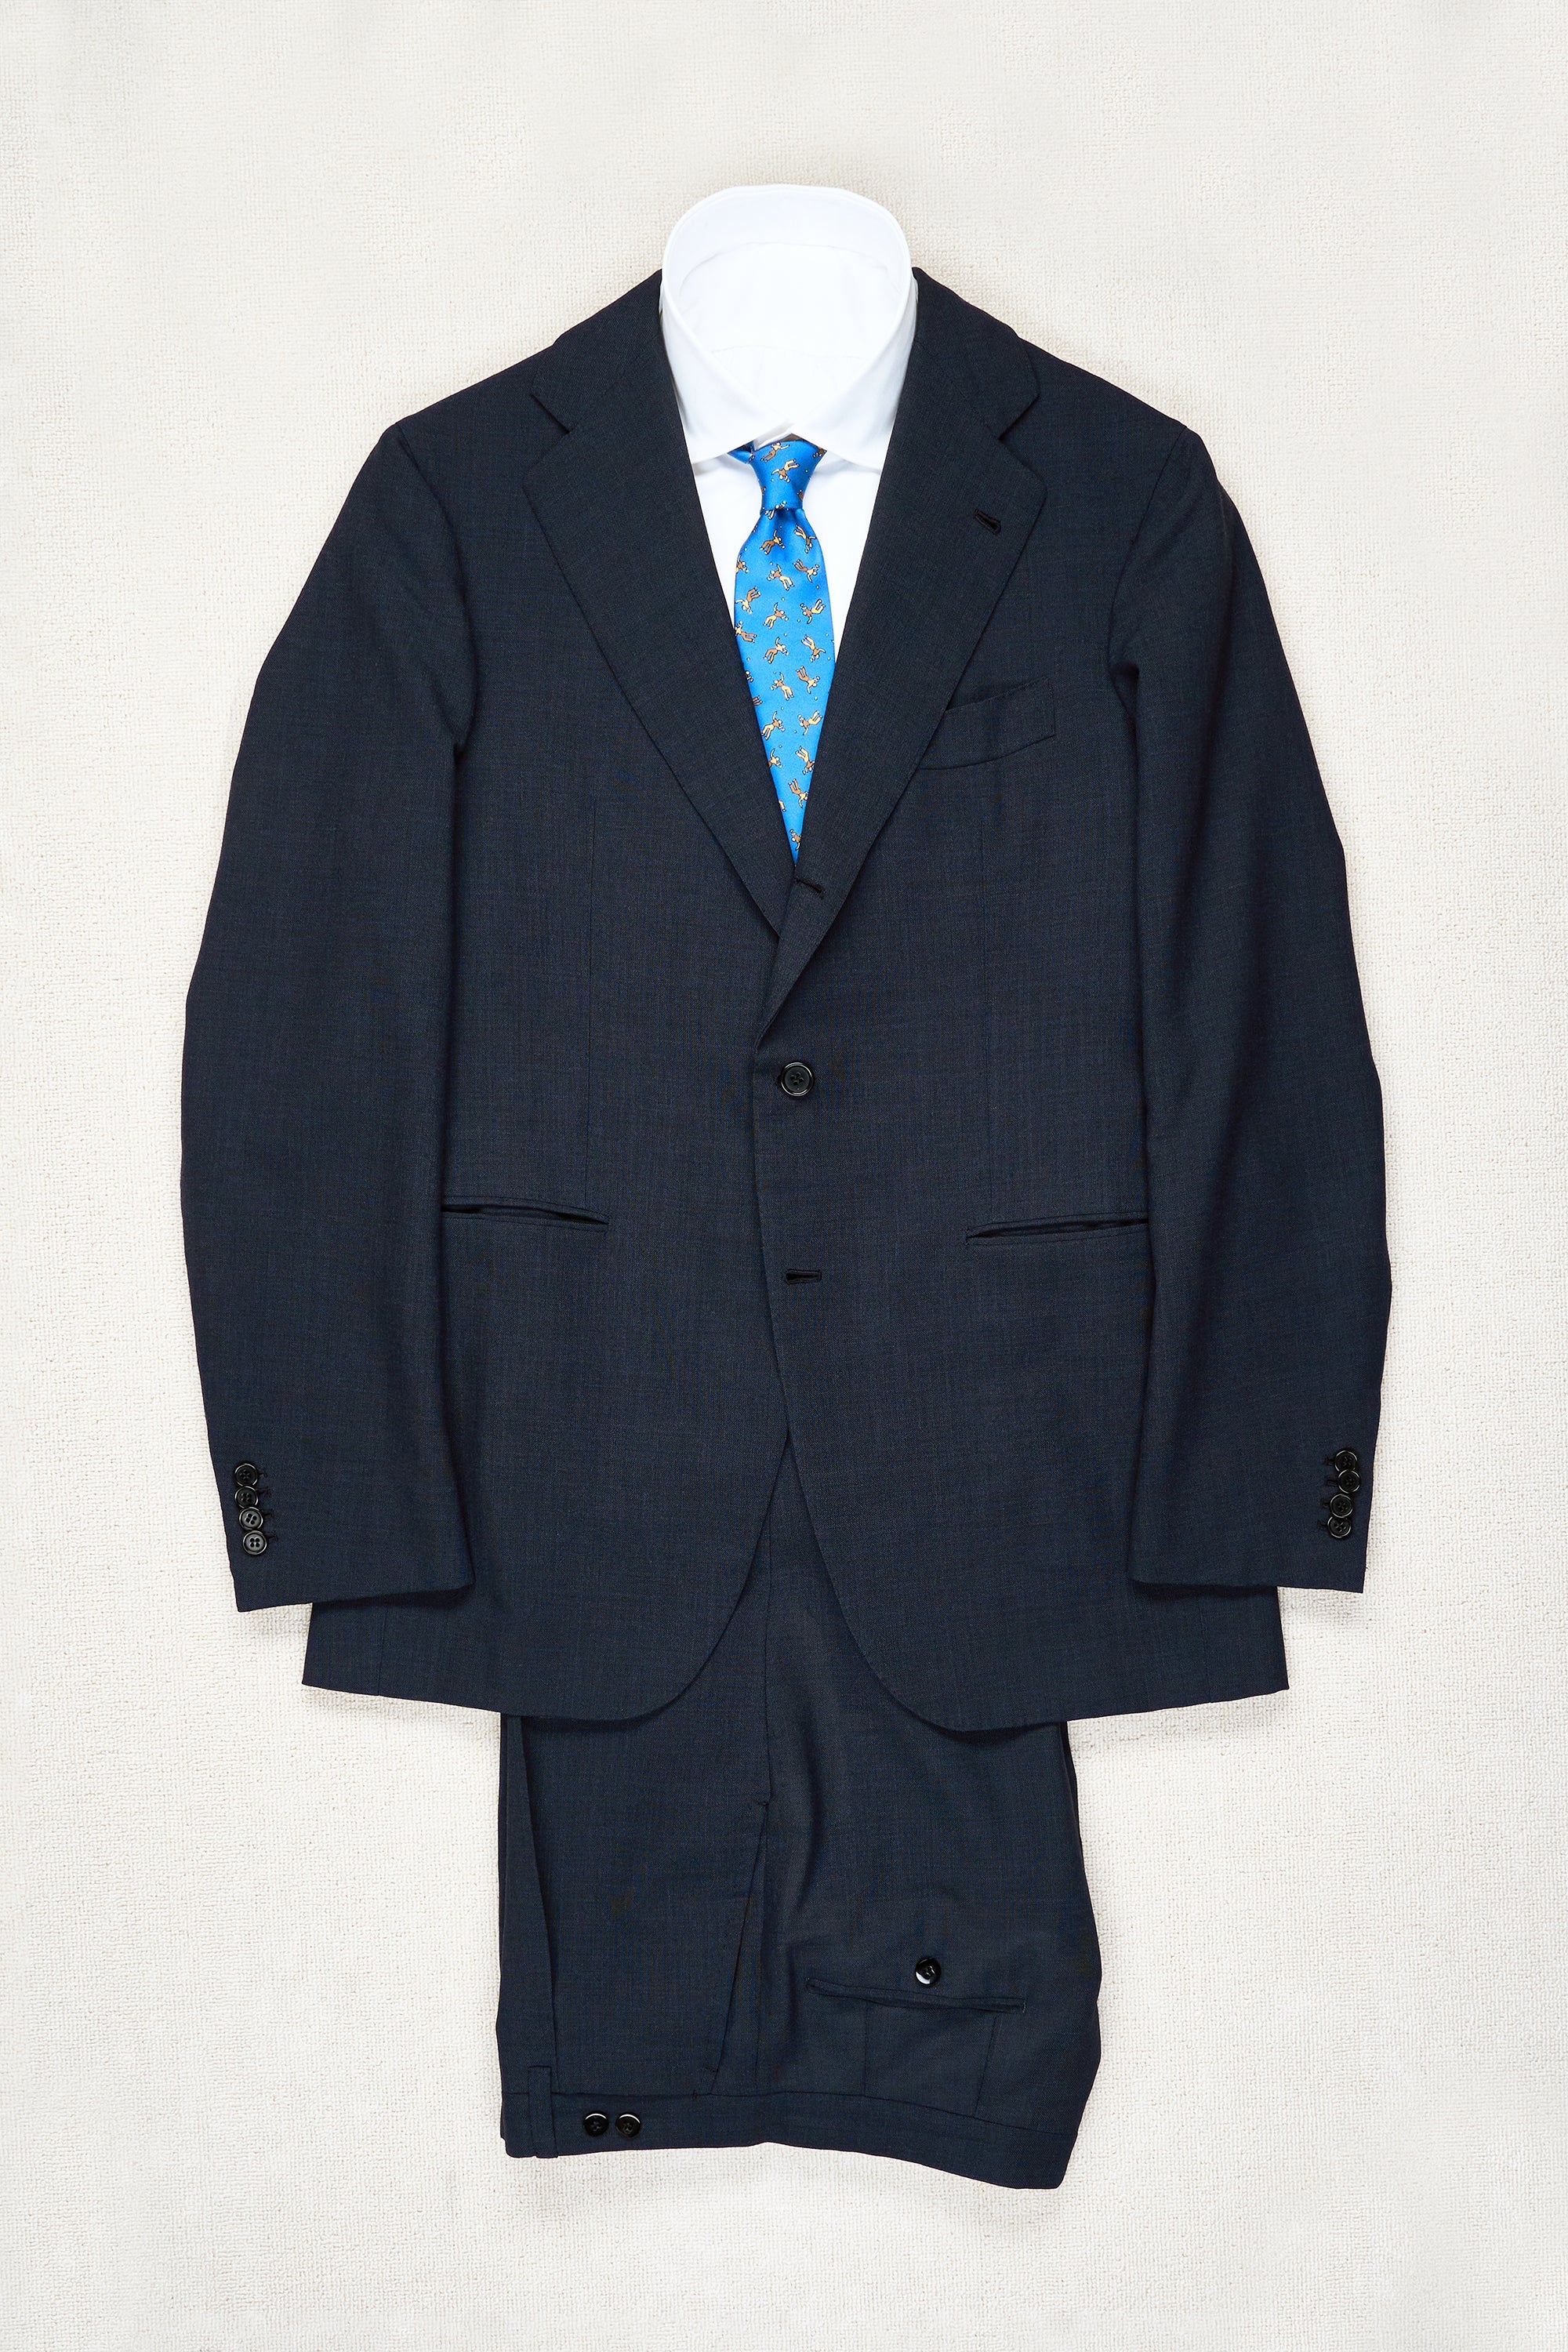 Orazio Luciano Blue Fresco Wool Suit